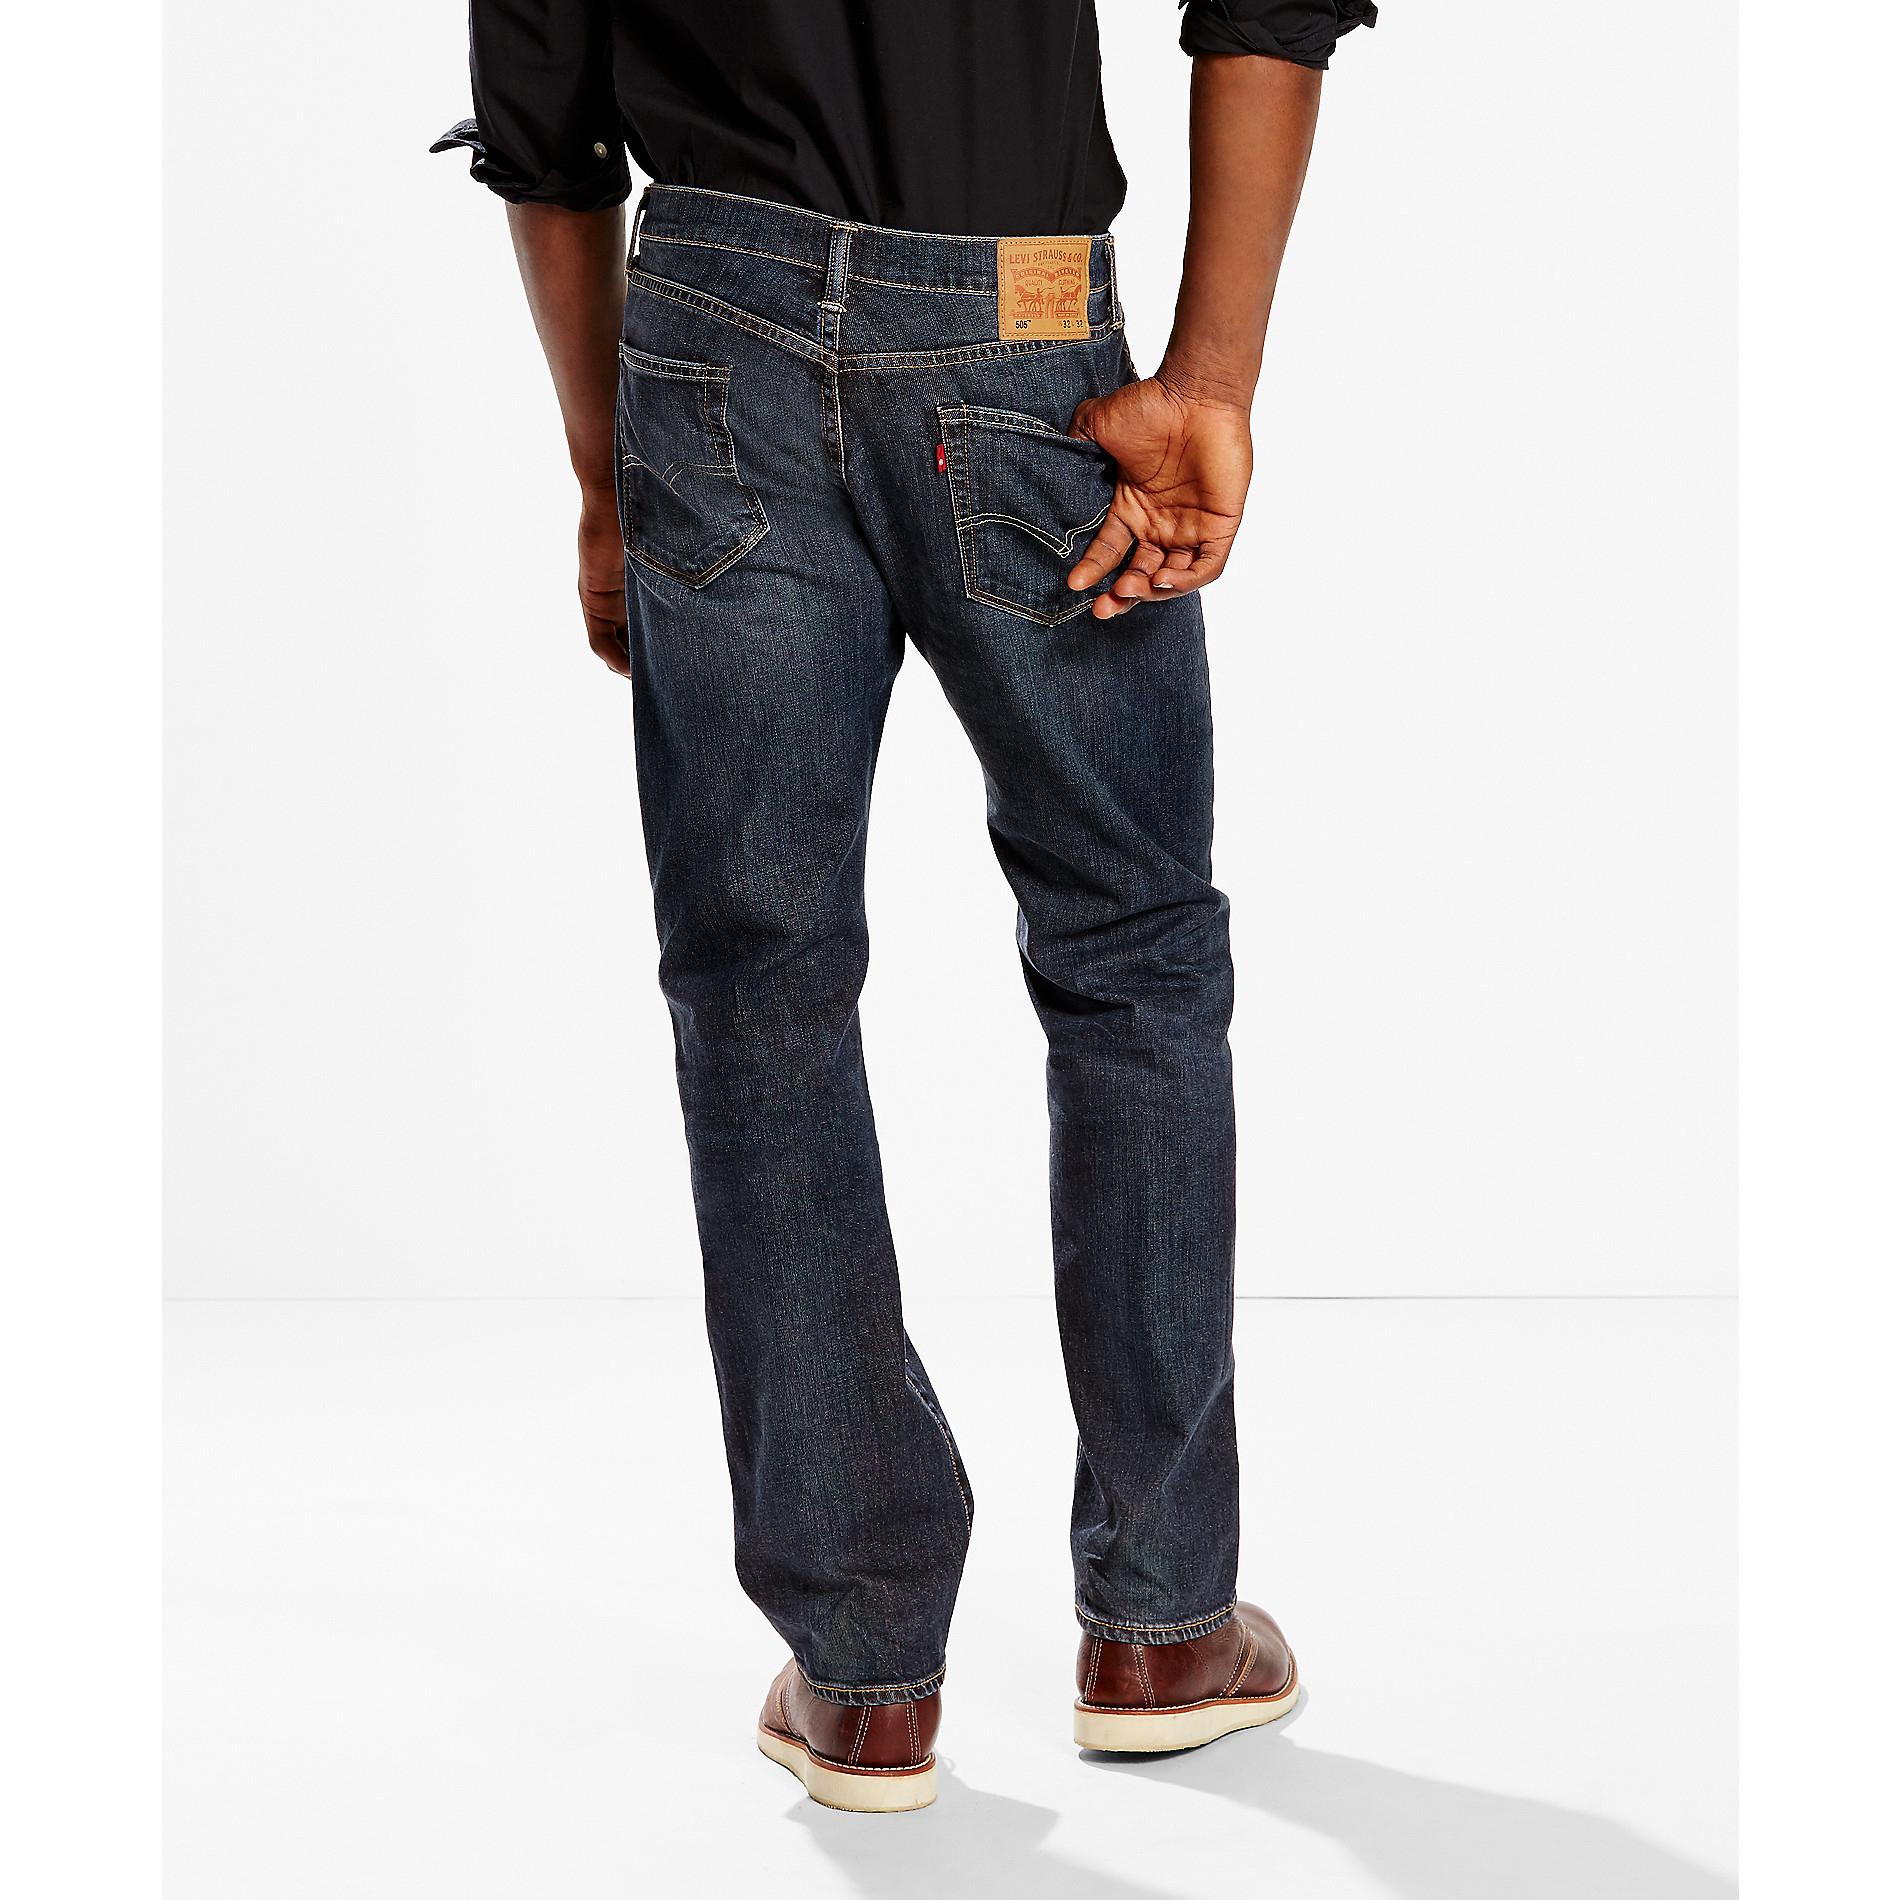 Levi's Men's 505 Regular Fit Jeans - Sears